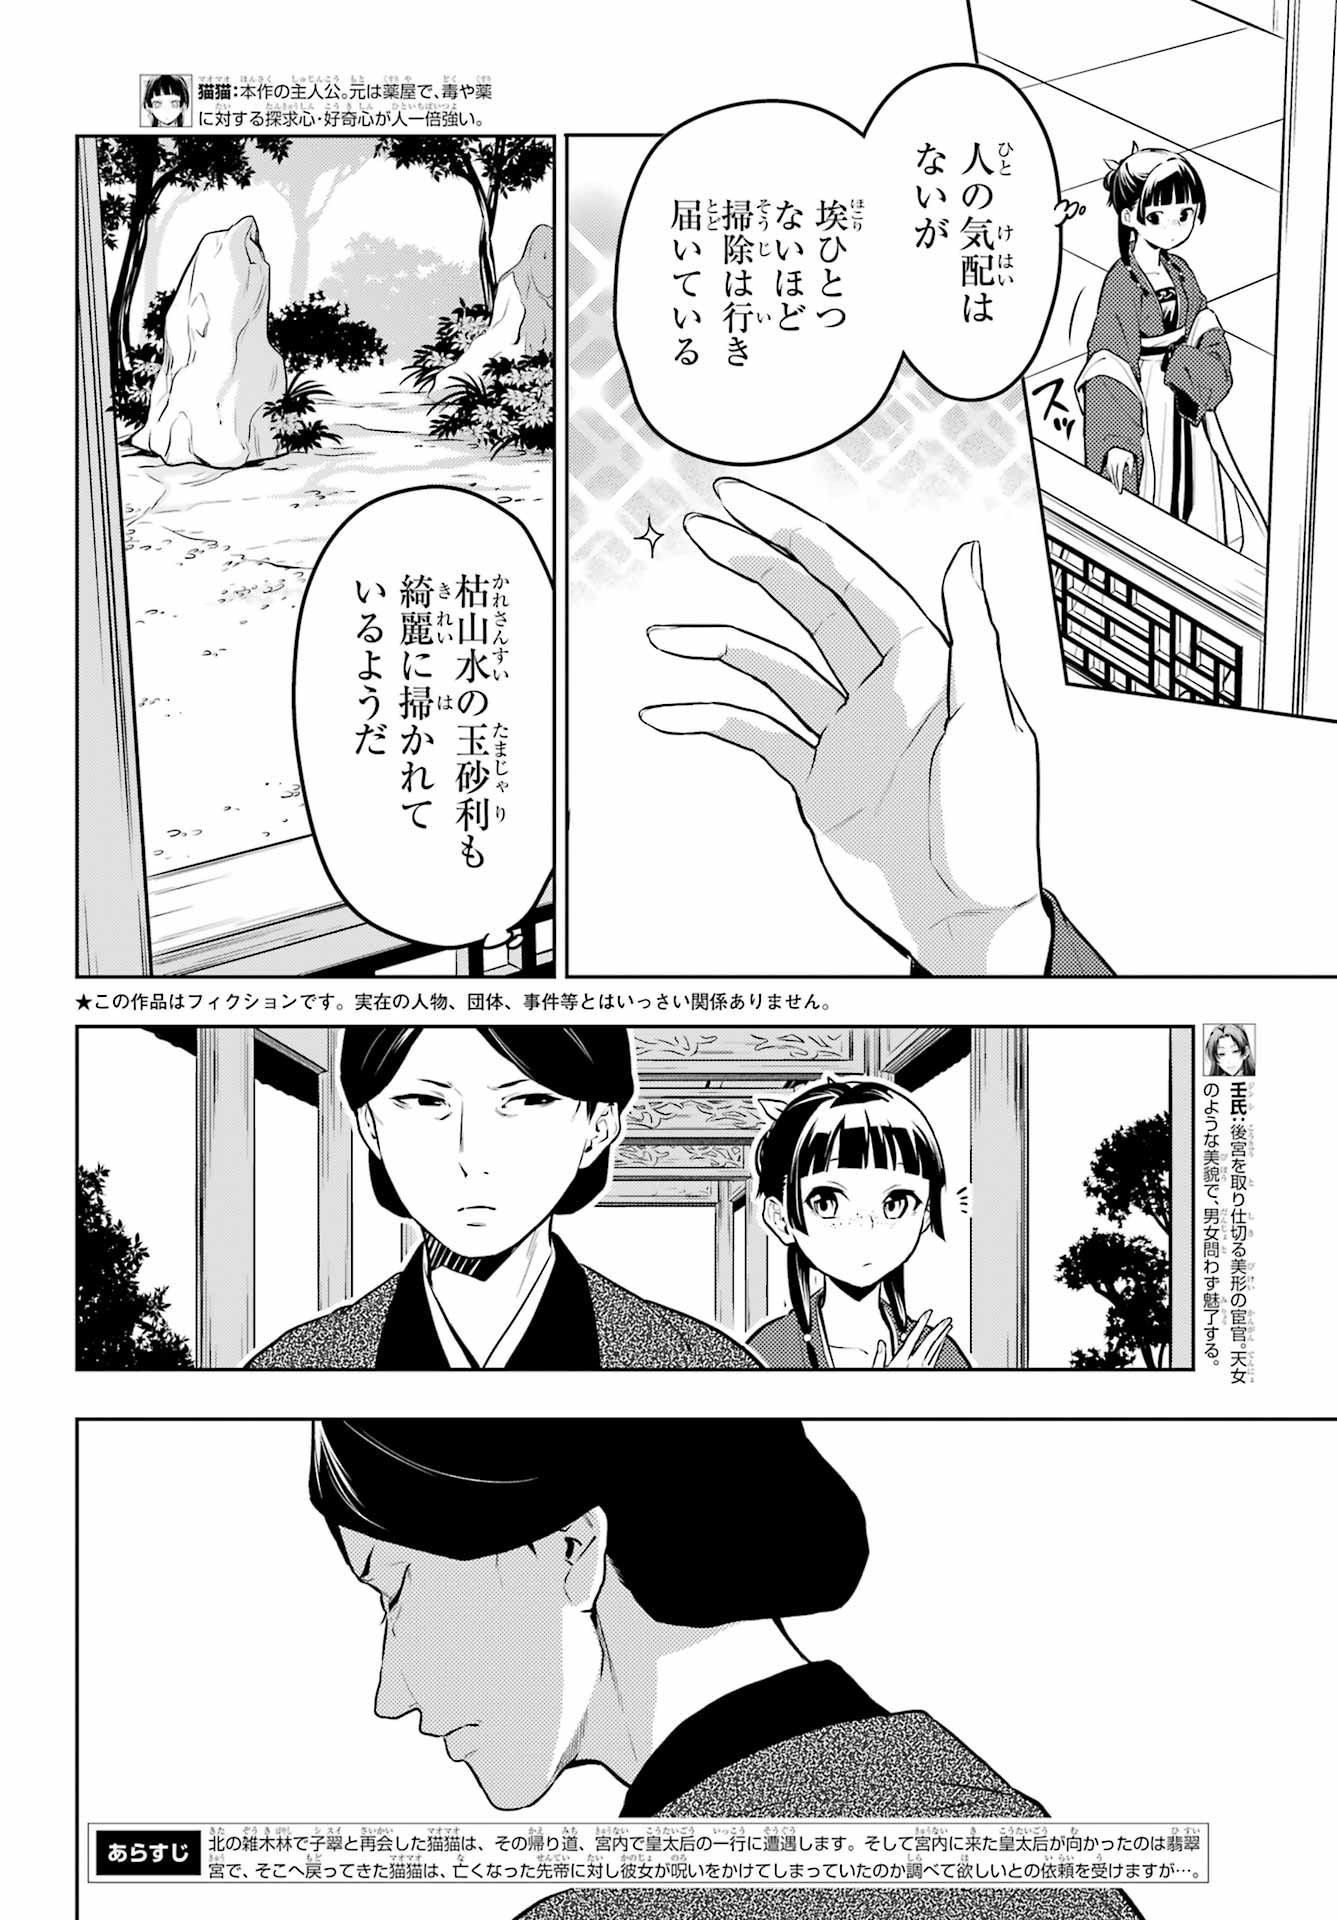 Kusuriya no Hitorigoto - Chapter 56 - Page 2